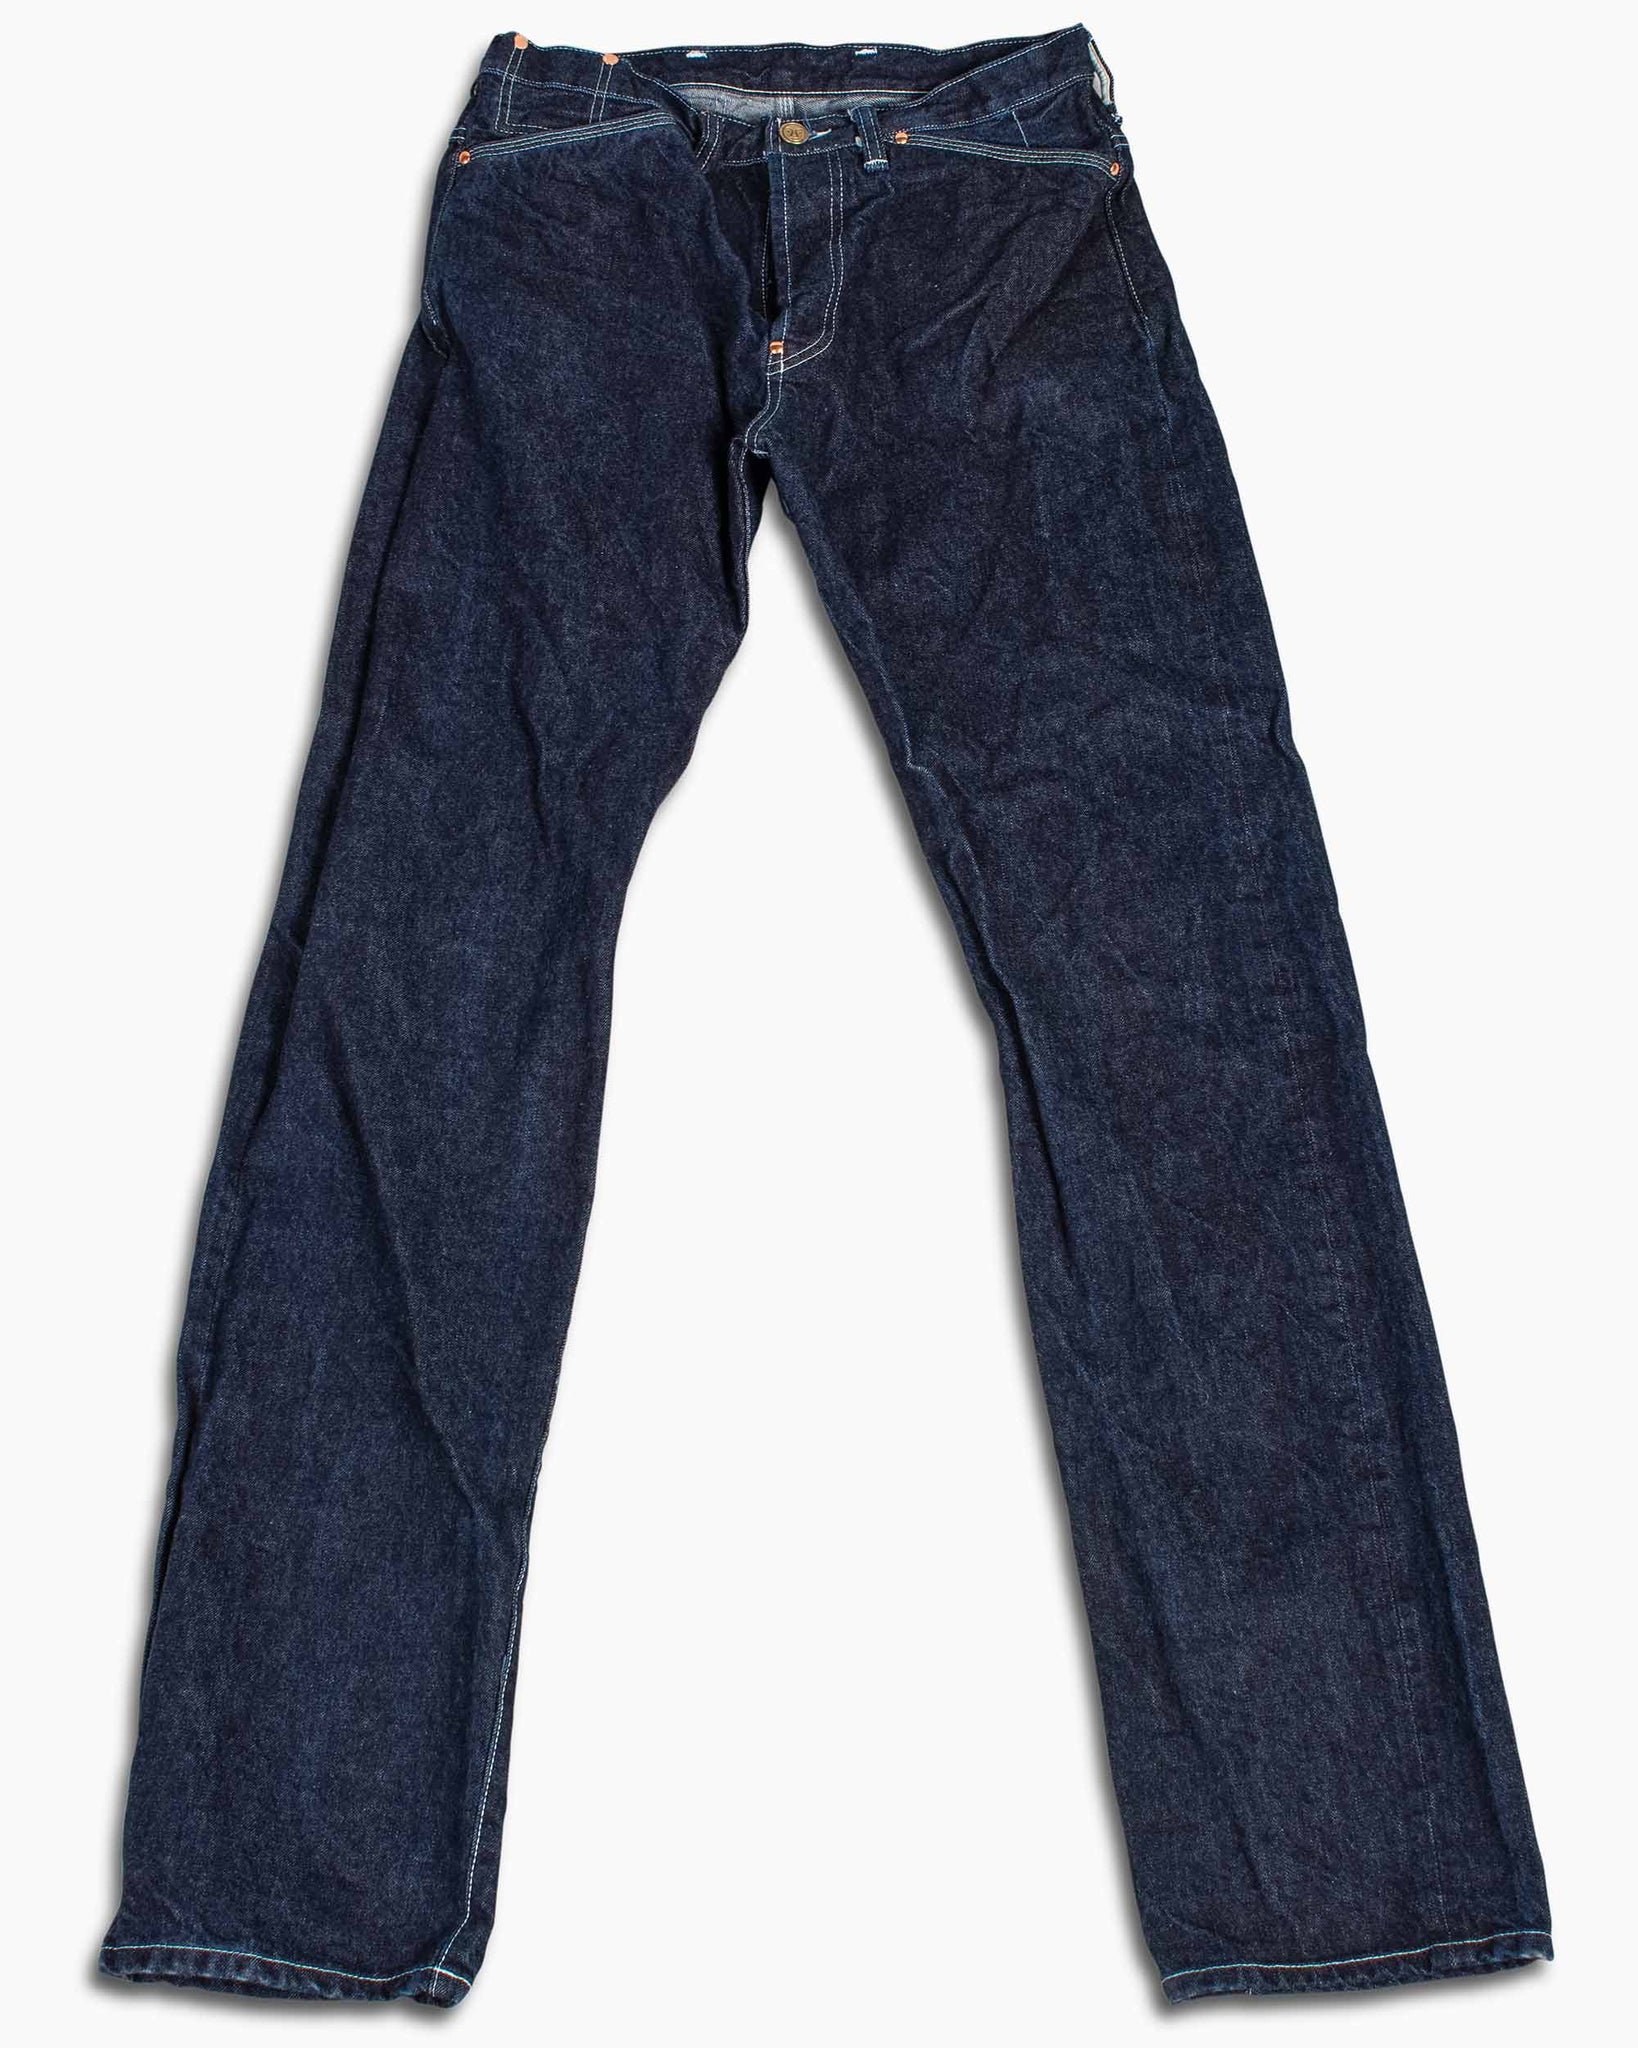 Shop Amber Skinny BBL Jeans